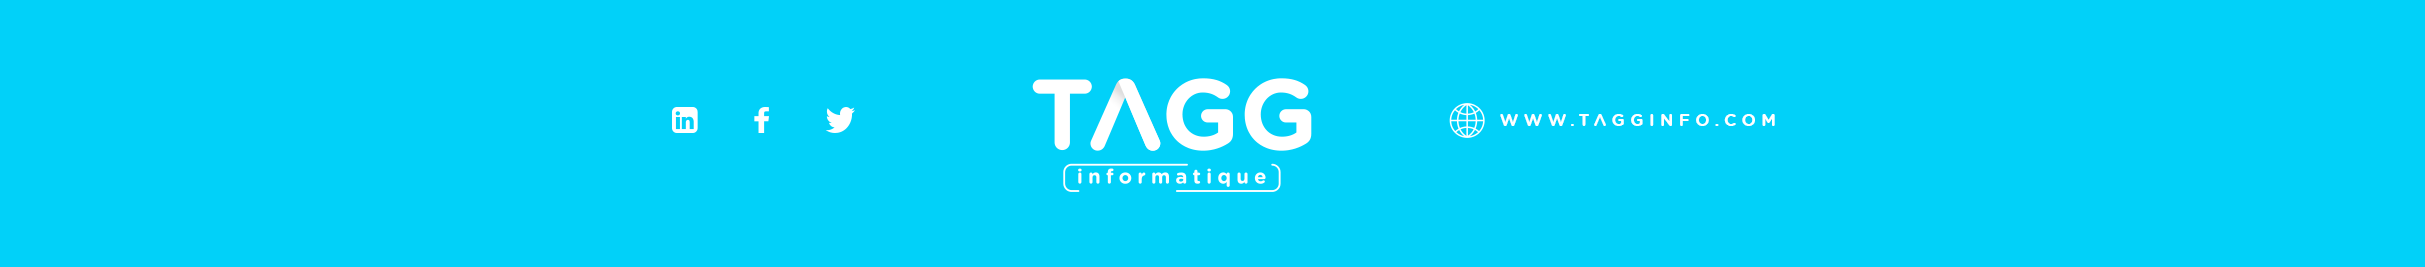 TAGG INFORMATIQUE's profile banner